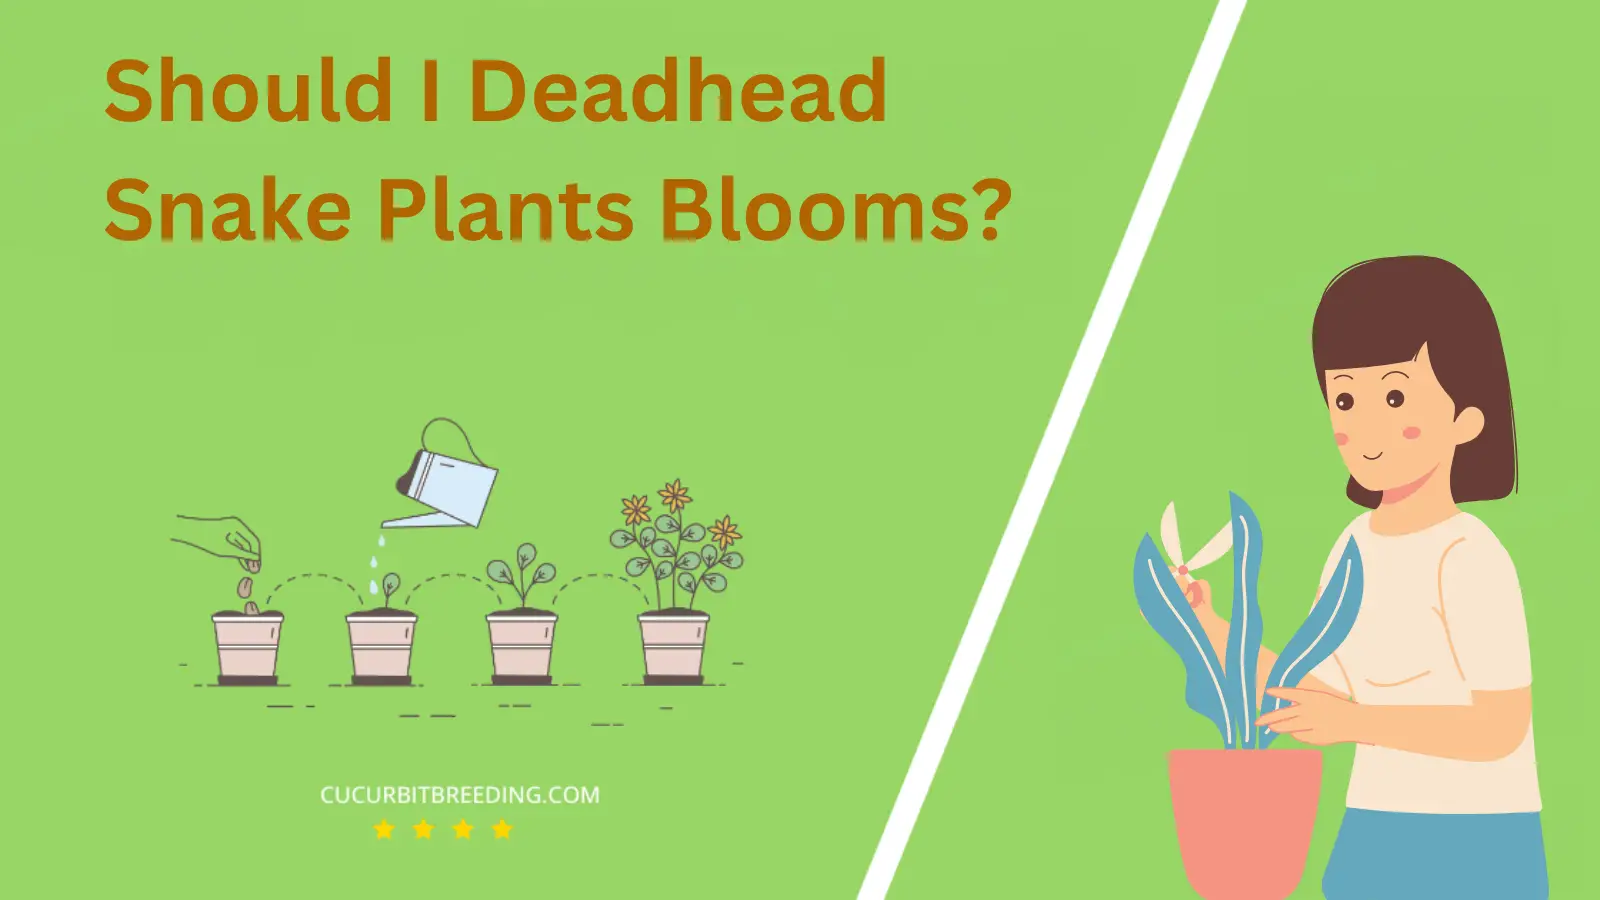 Should I Deadhead Snake Plants Blooms?